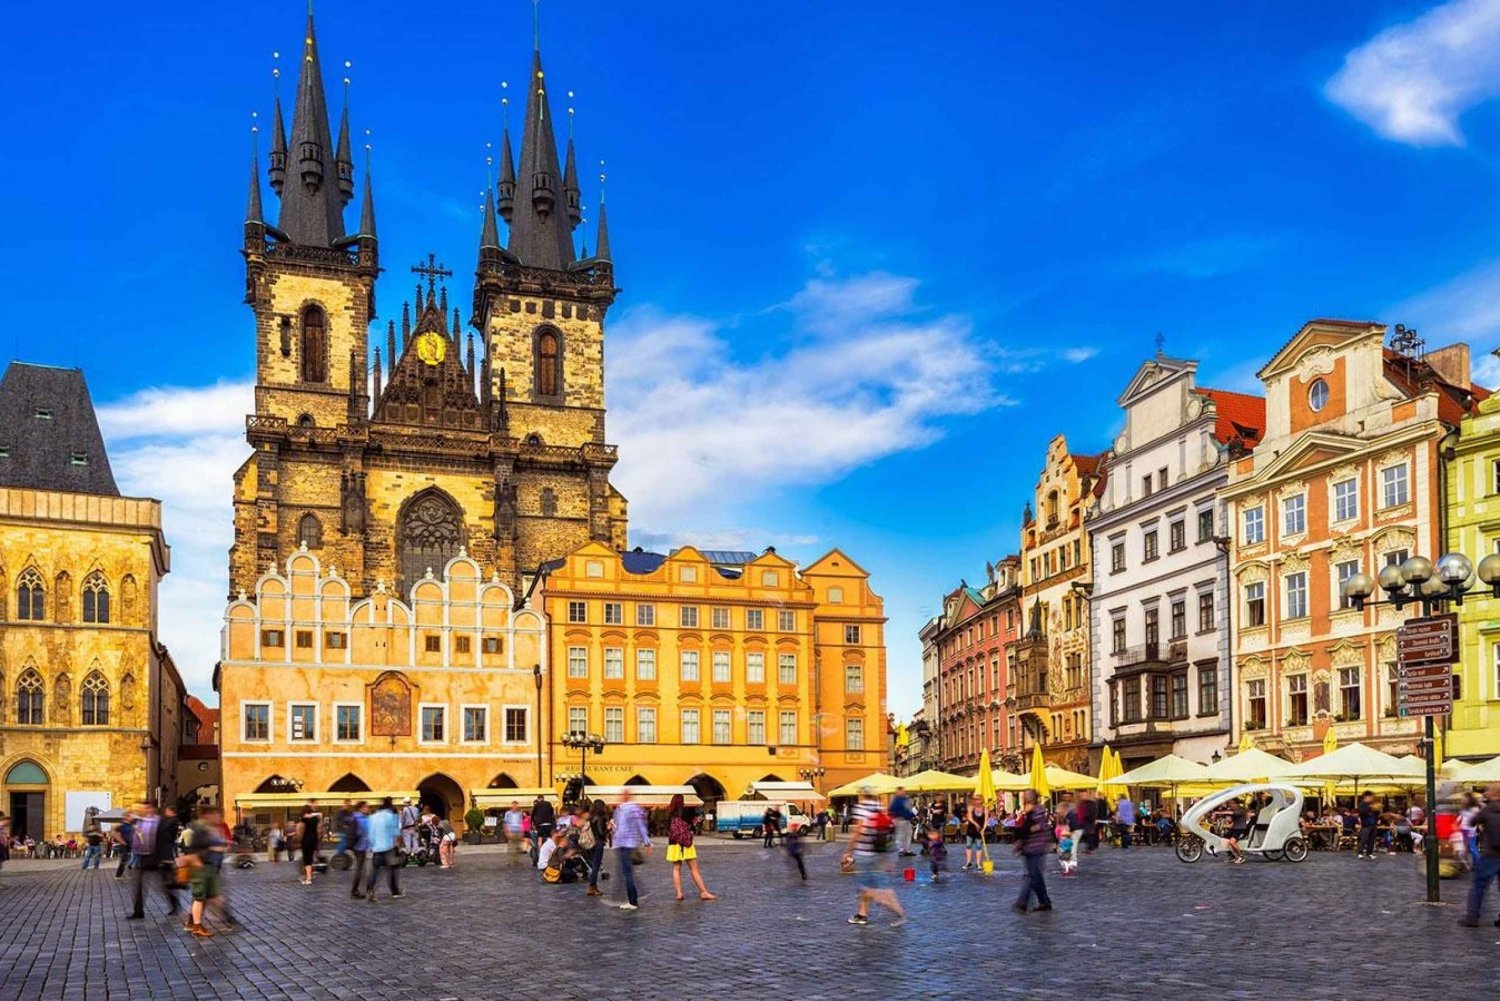 Prague Audioguide - TravelMate app for your smartphone